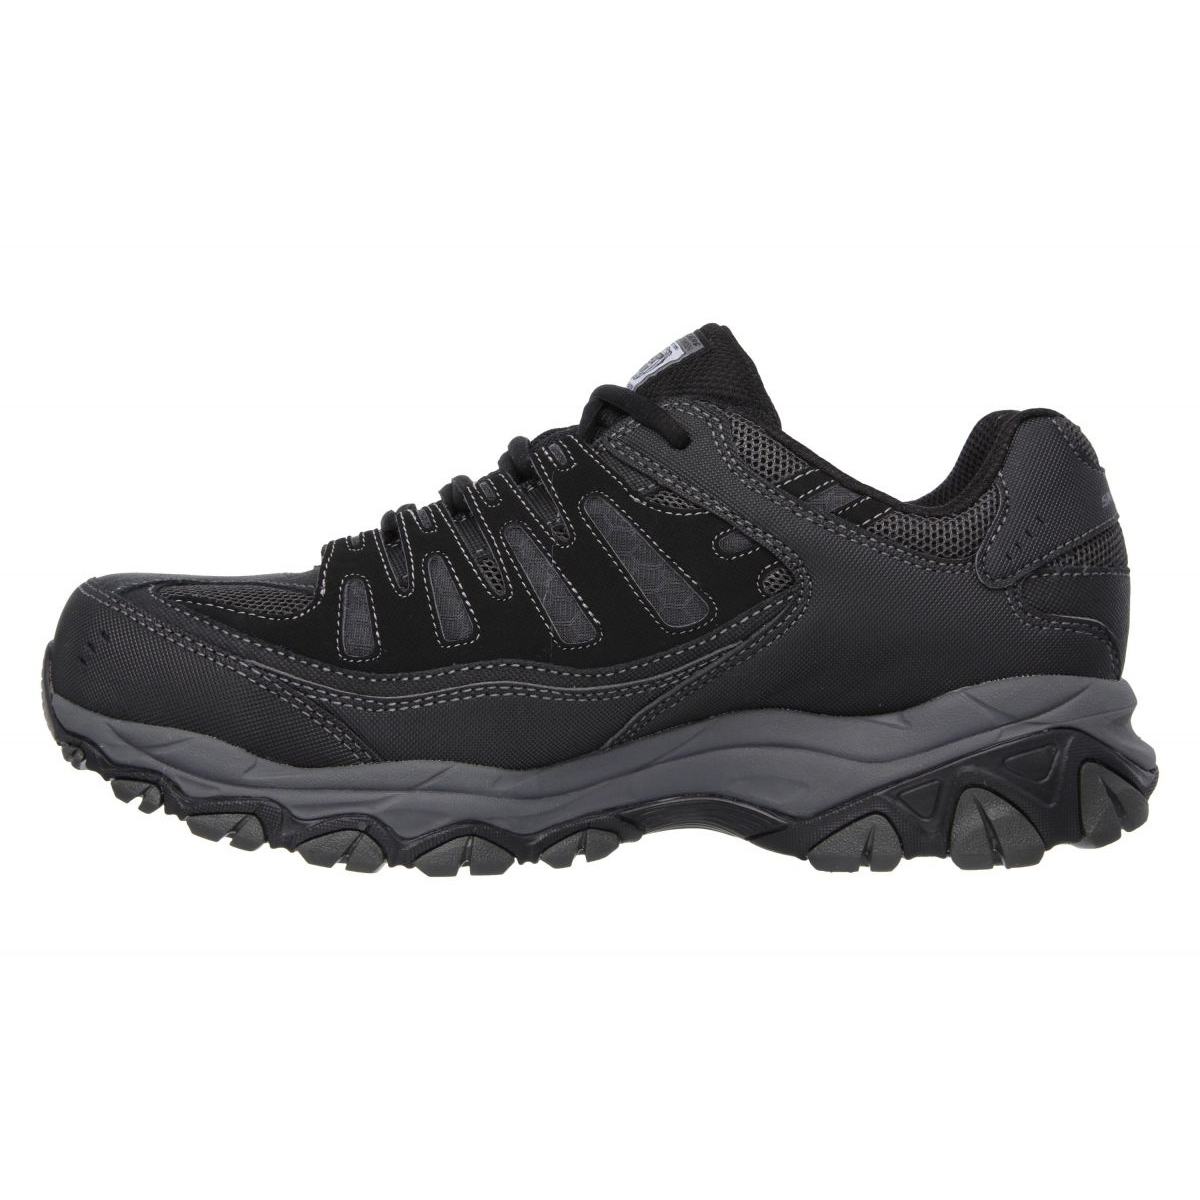 Skechers Men's Cankton-U Industrial Shoe 7 BLACK/CHARCOAL - BLACK/CHARCOAL, 8 Wide